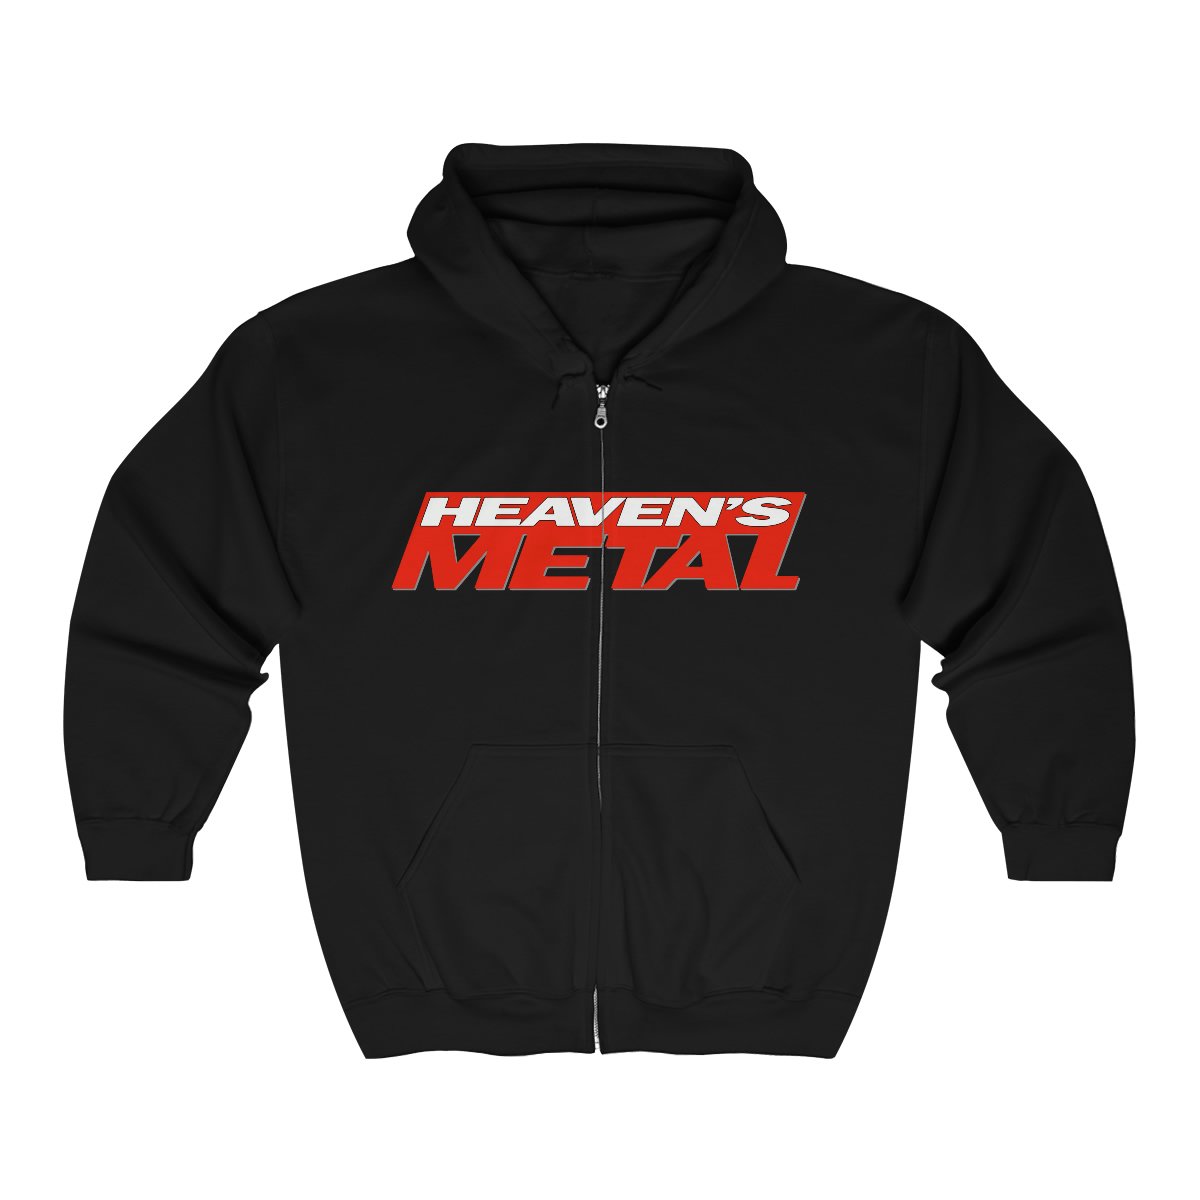 Heaven’s Metal Logo Full Zip Hooded Sweatshirt R2K